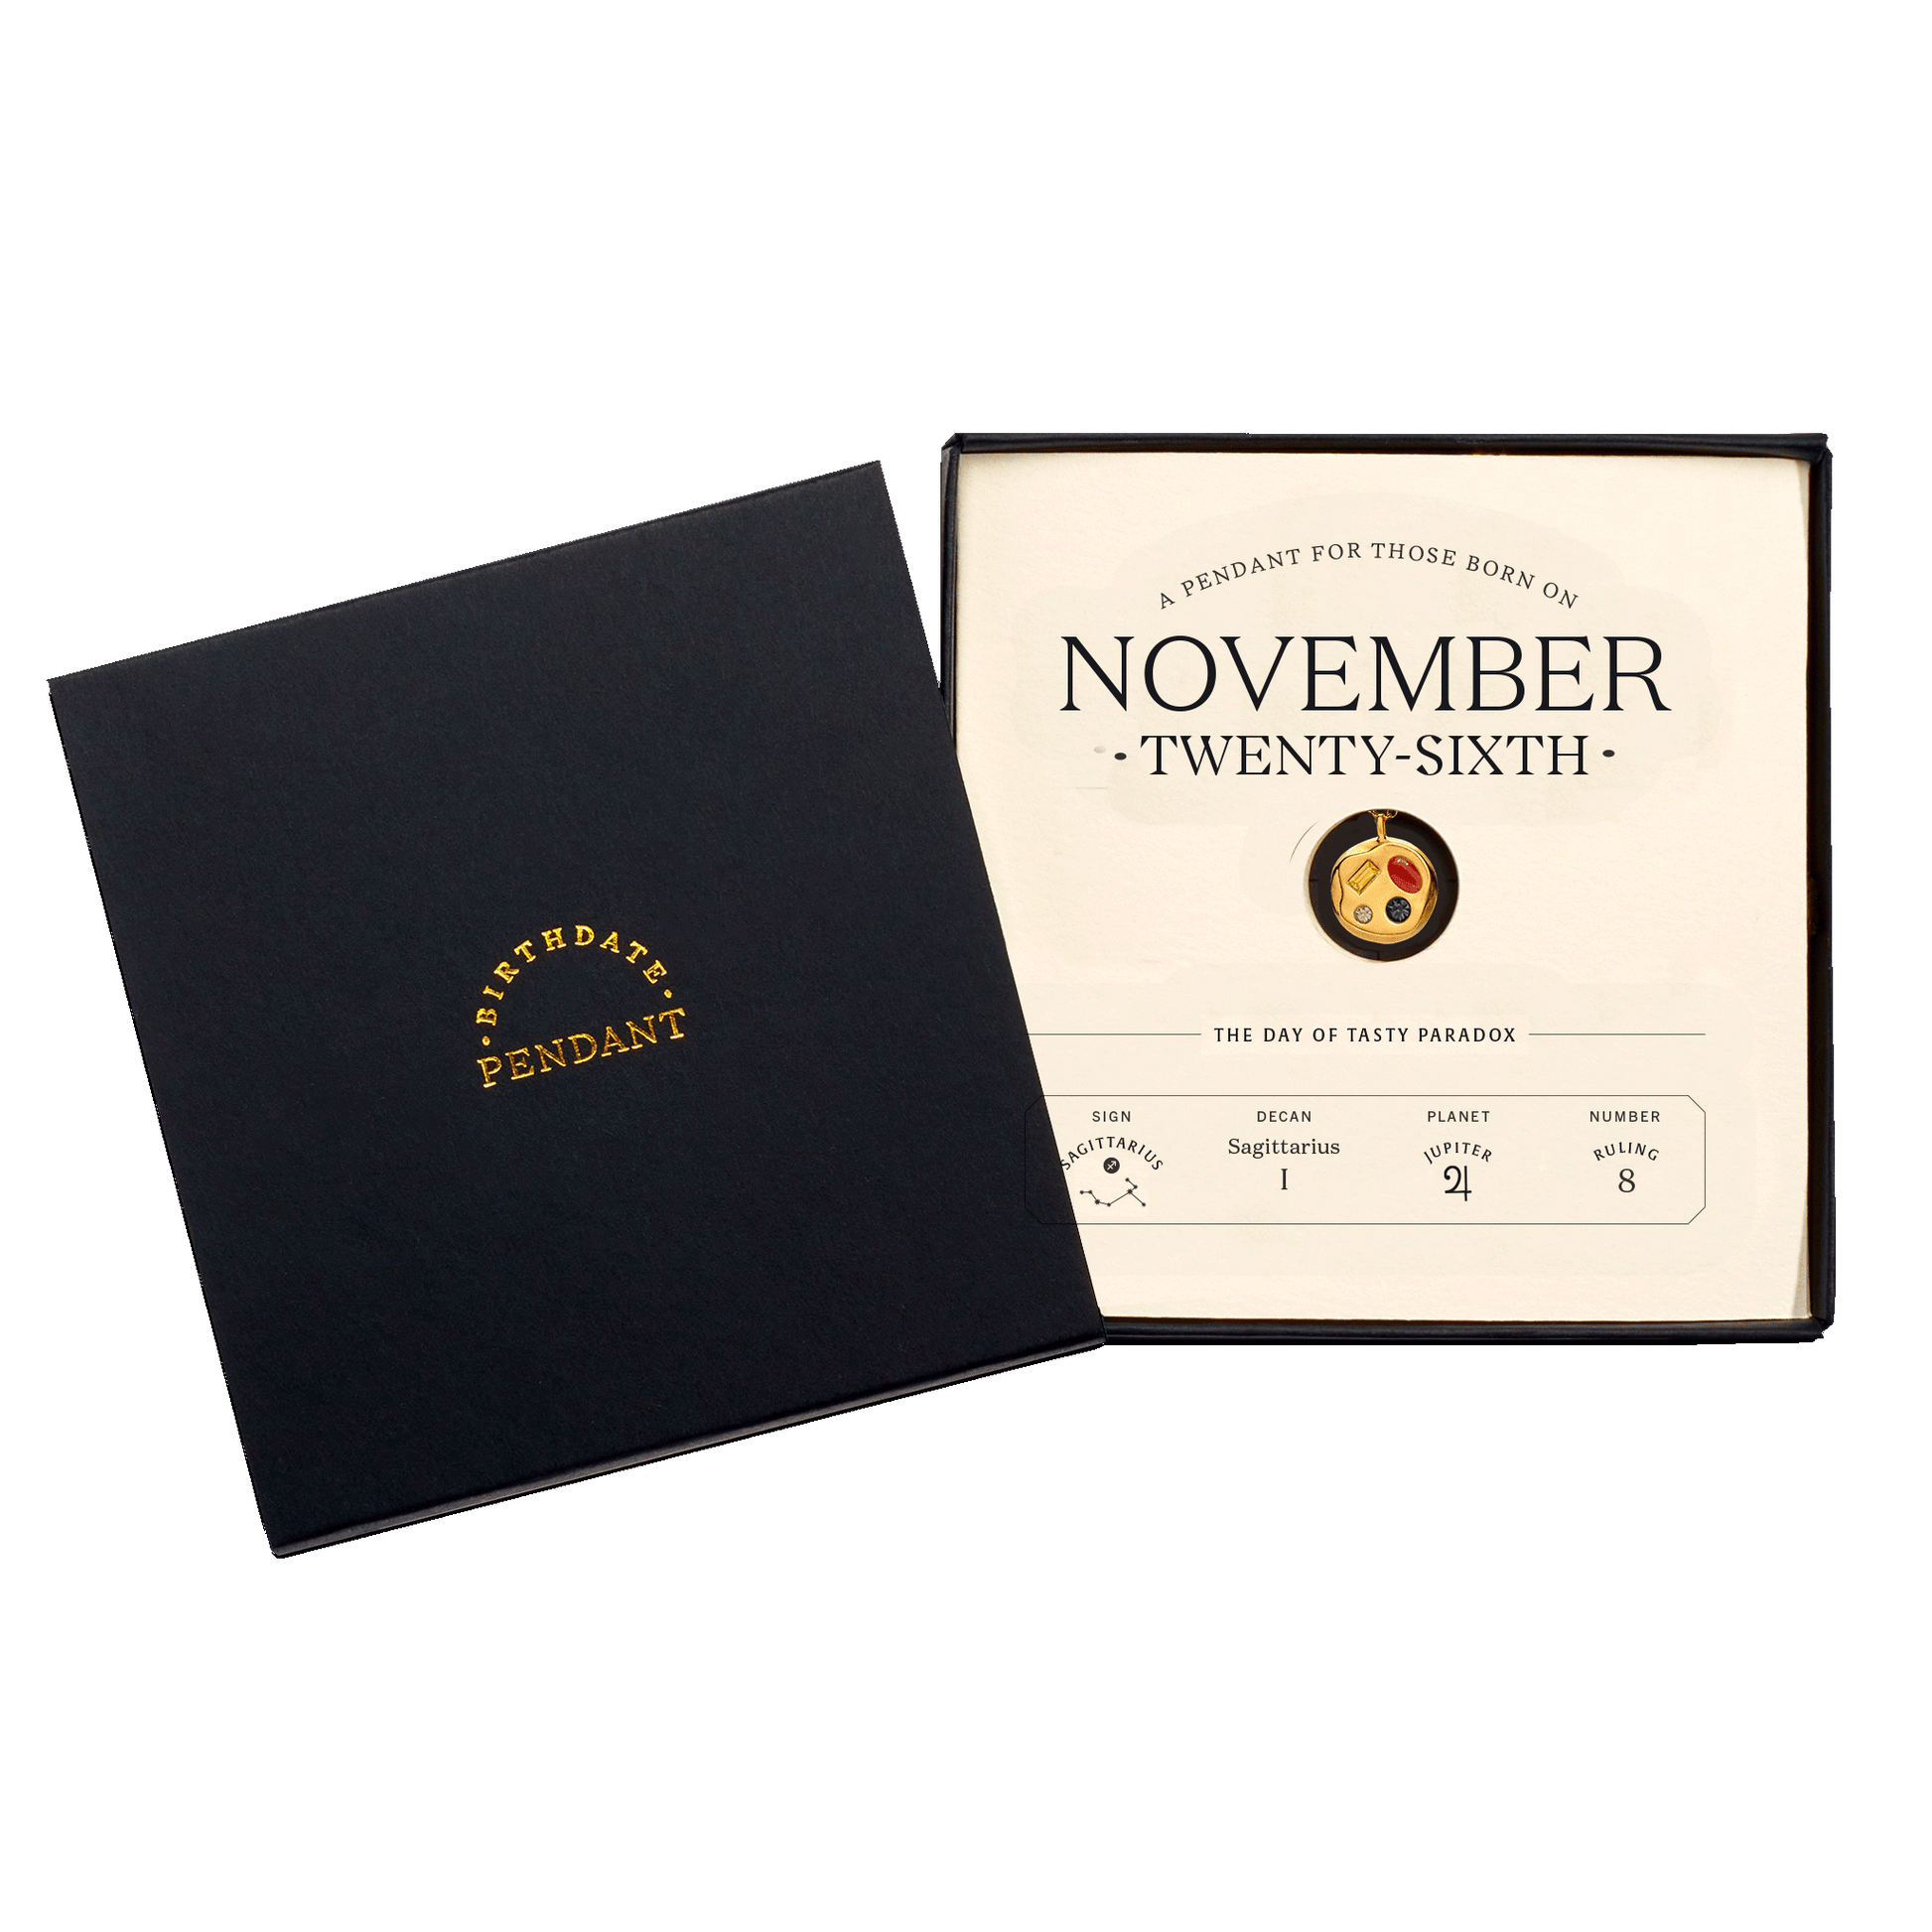 The November Twenty-Sixth Pendant inside its box